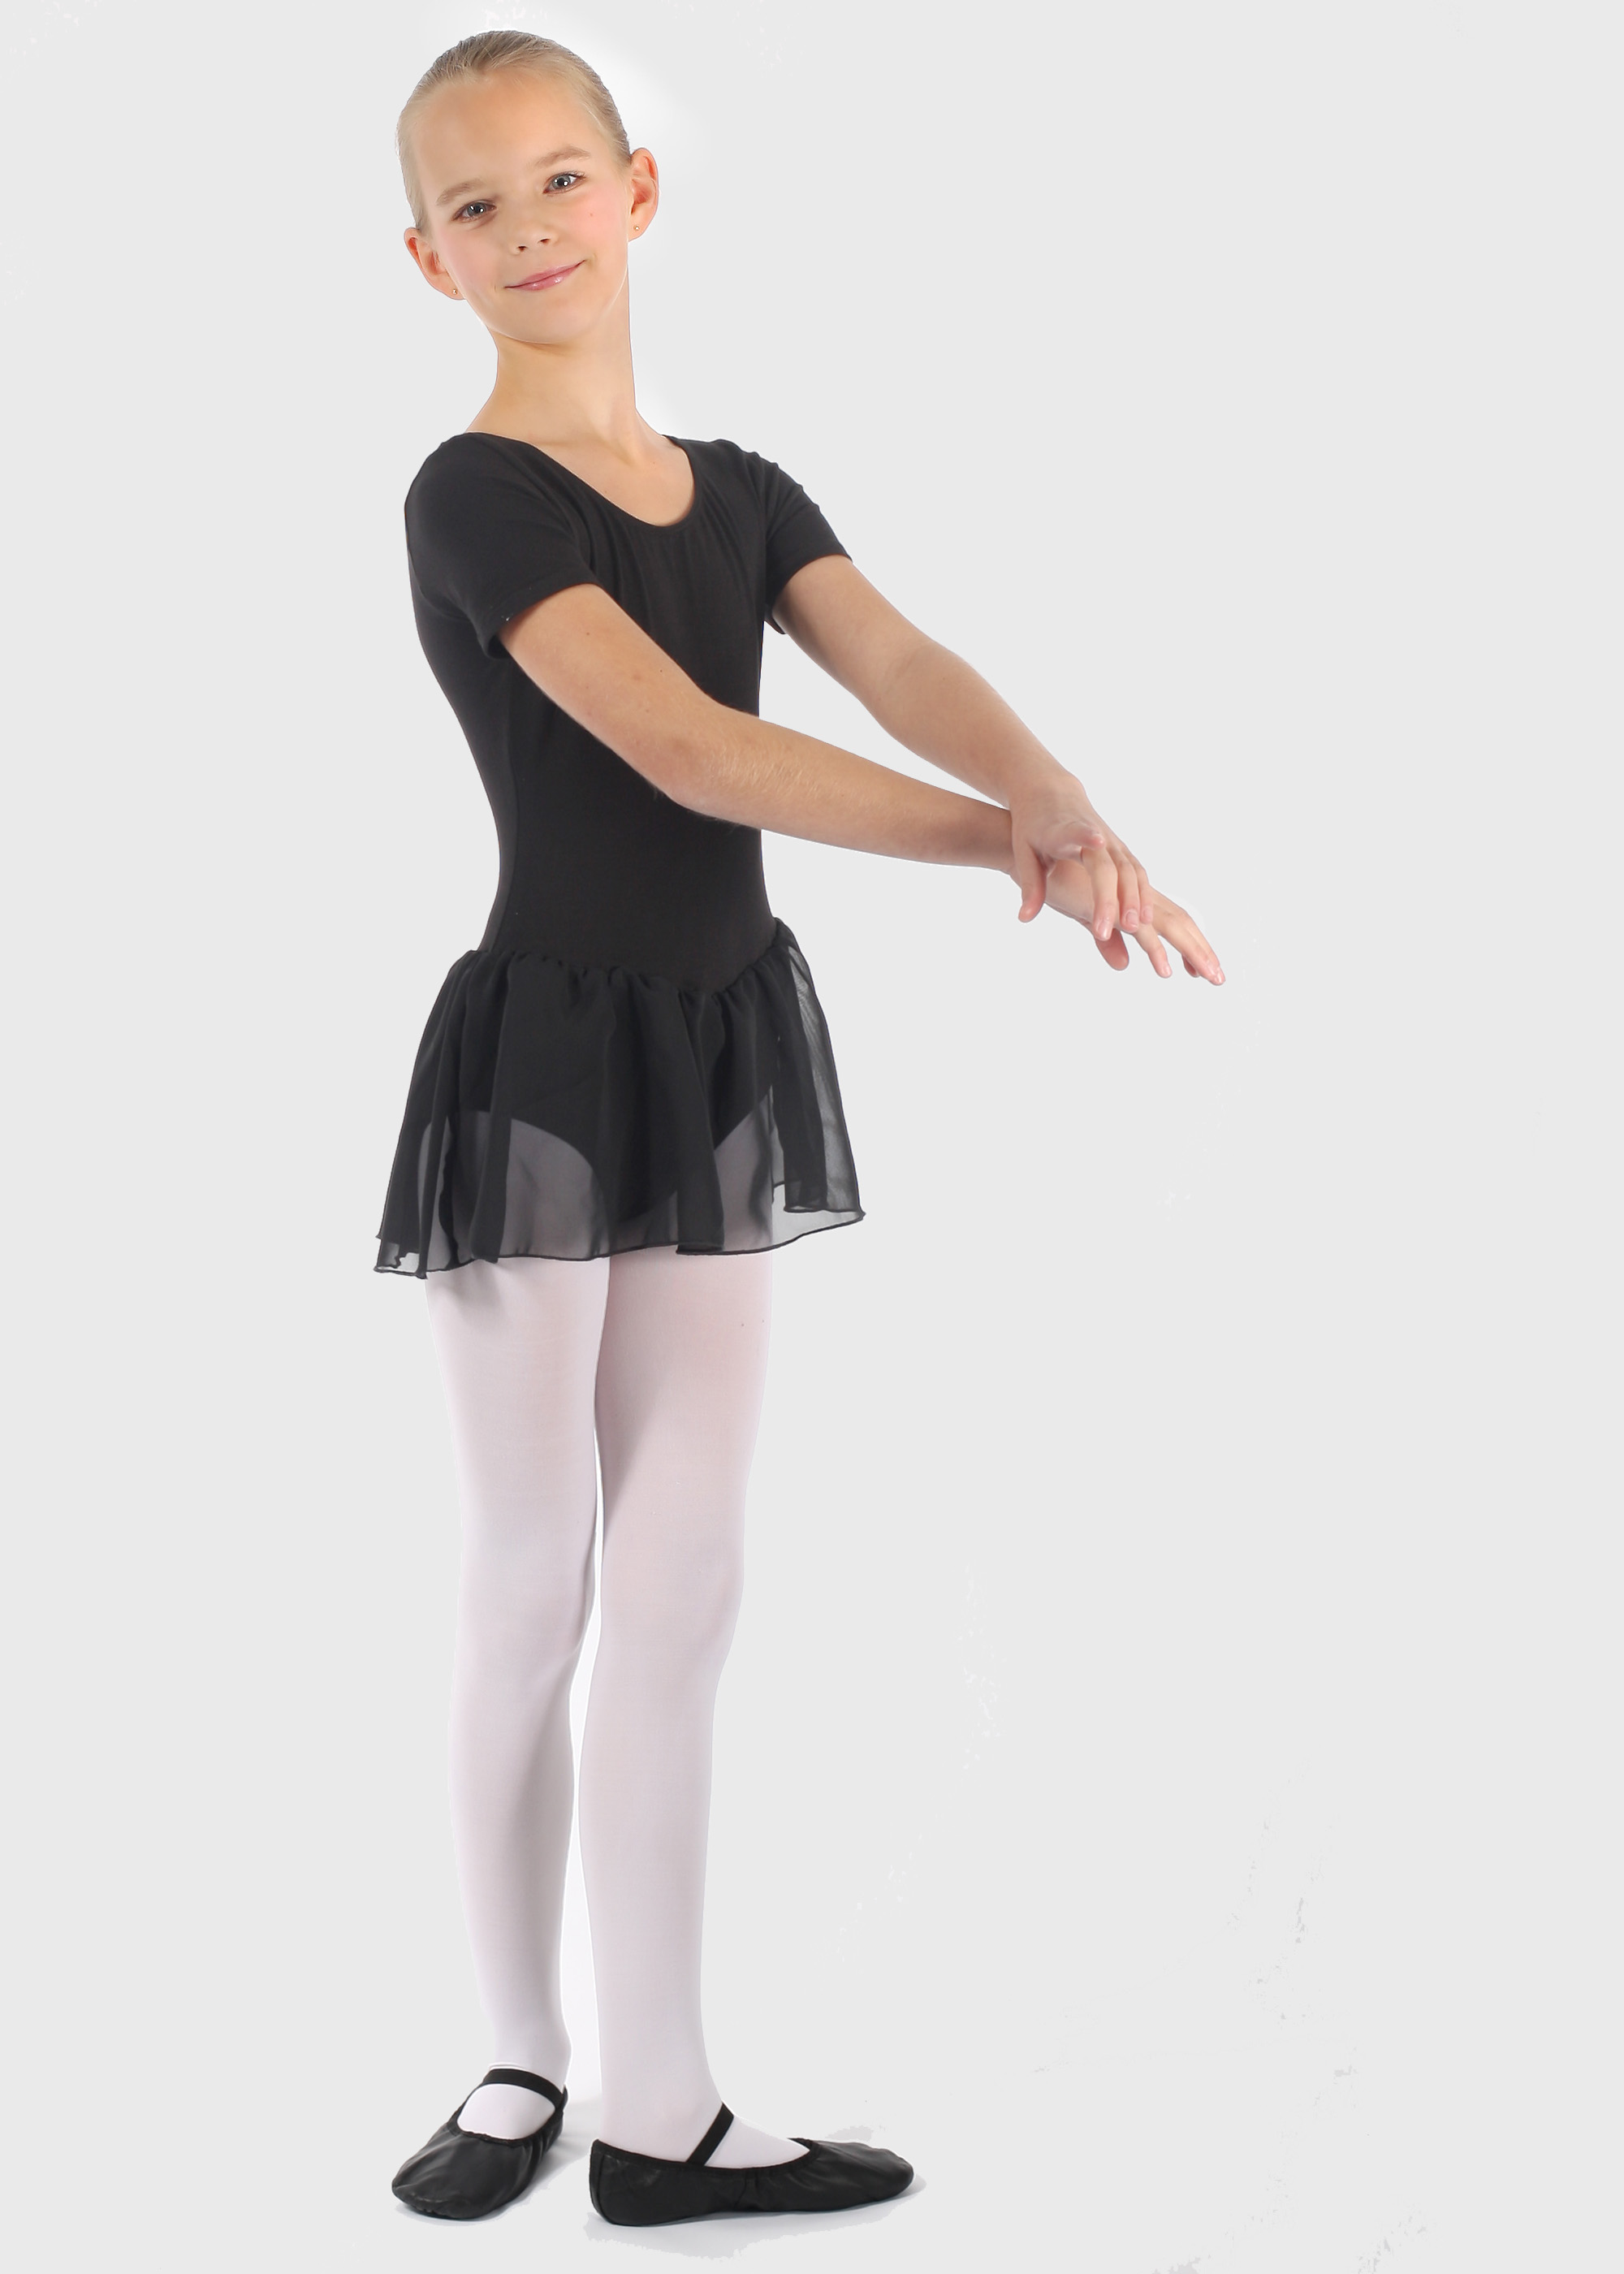 Ballettbekleidung bloch - Der absolute TOP-Favorit 